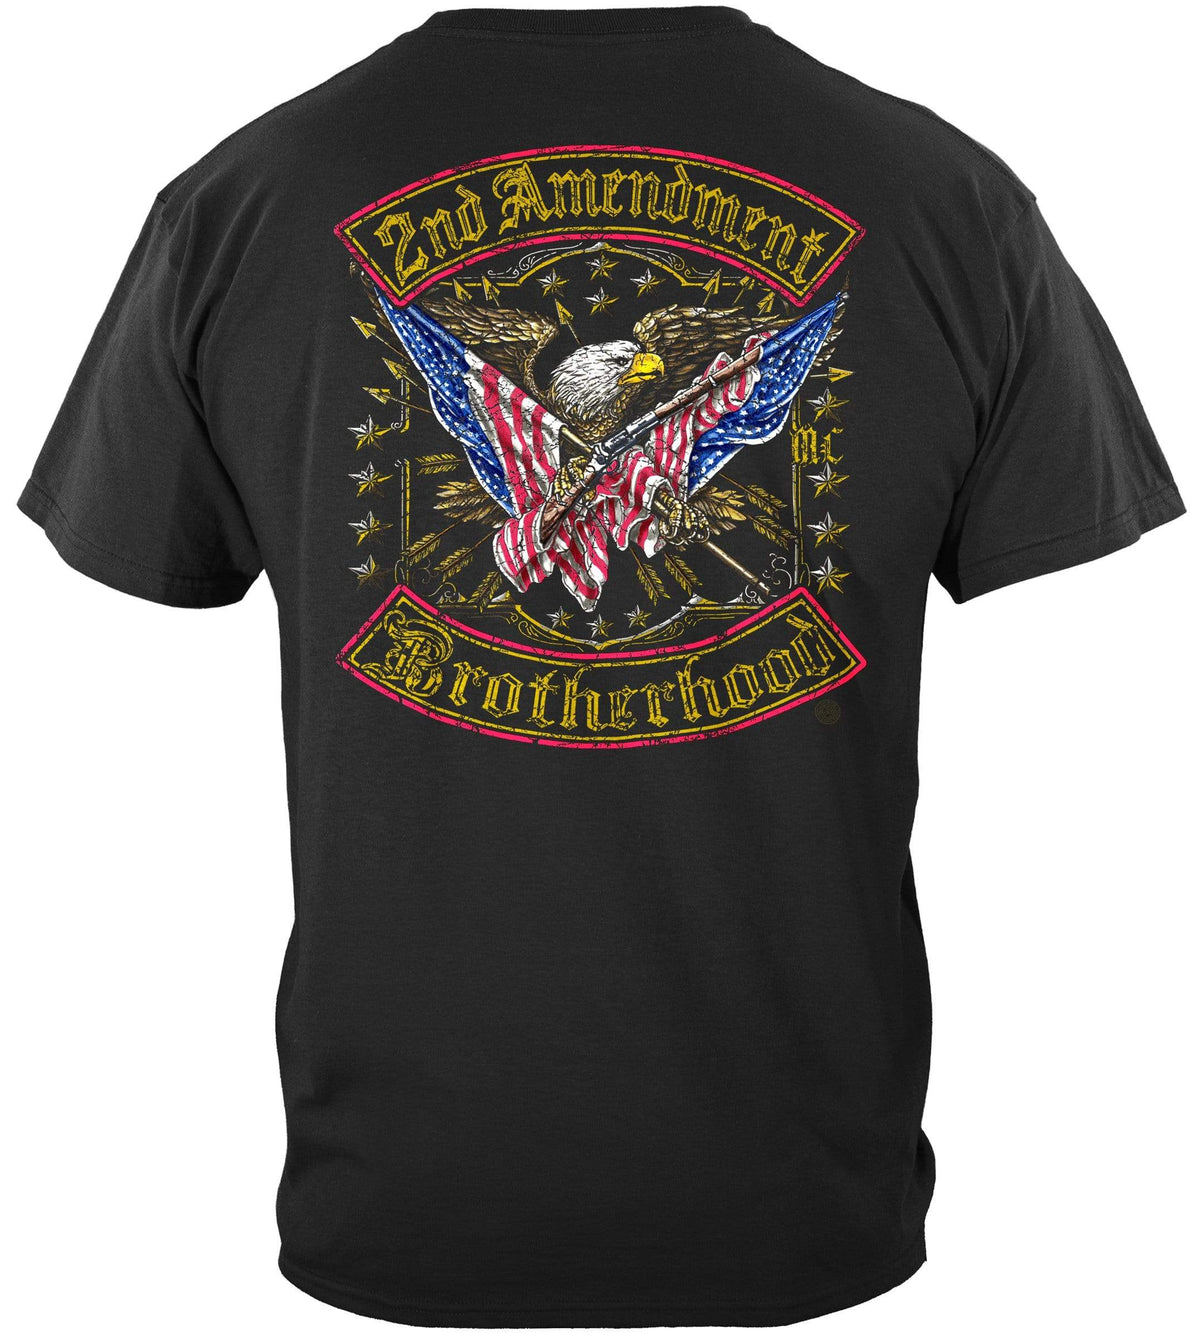 2nd Amendment Brotherhood T-Shirt - Shop Erazor Bits